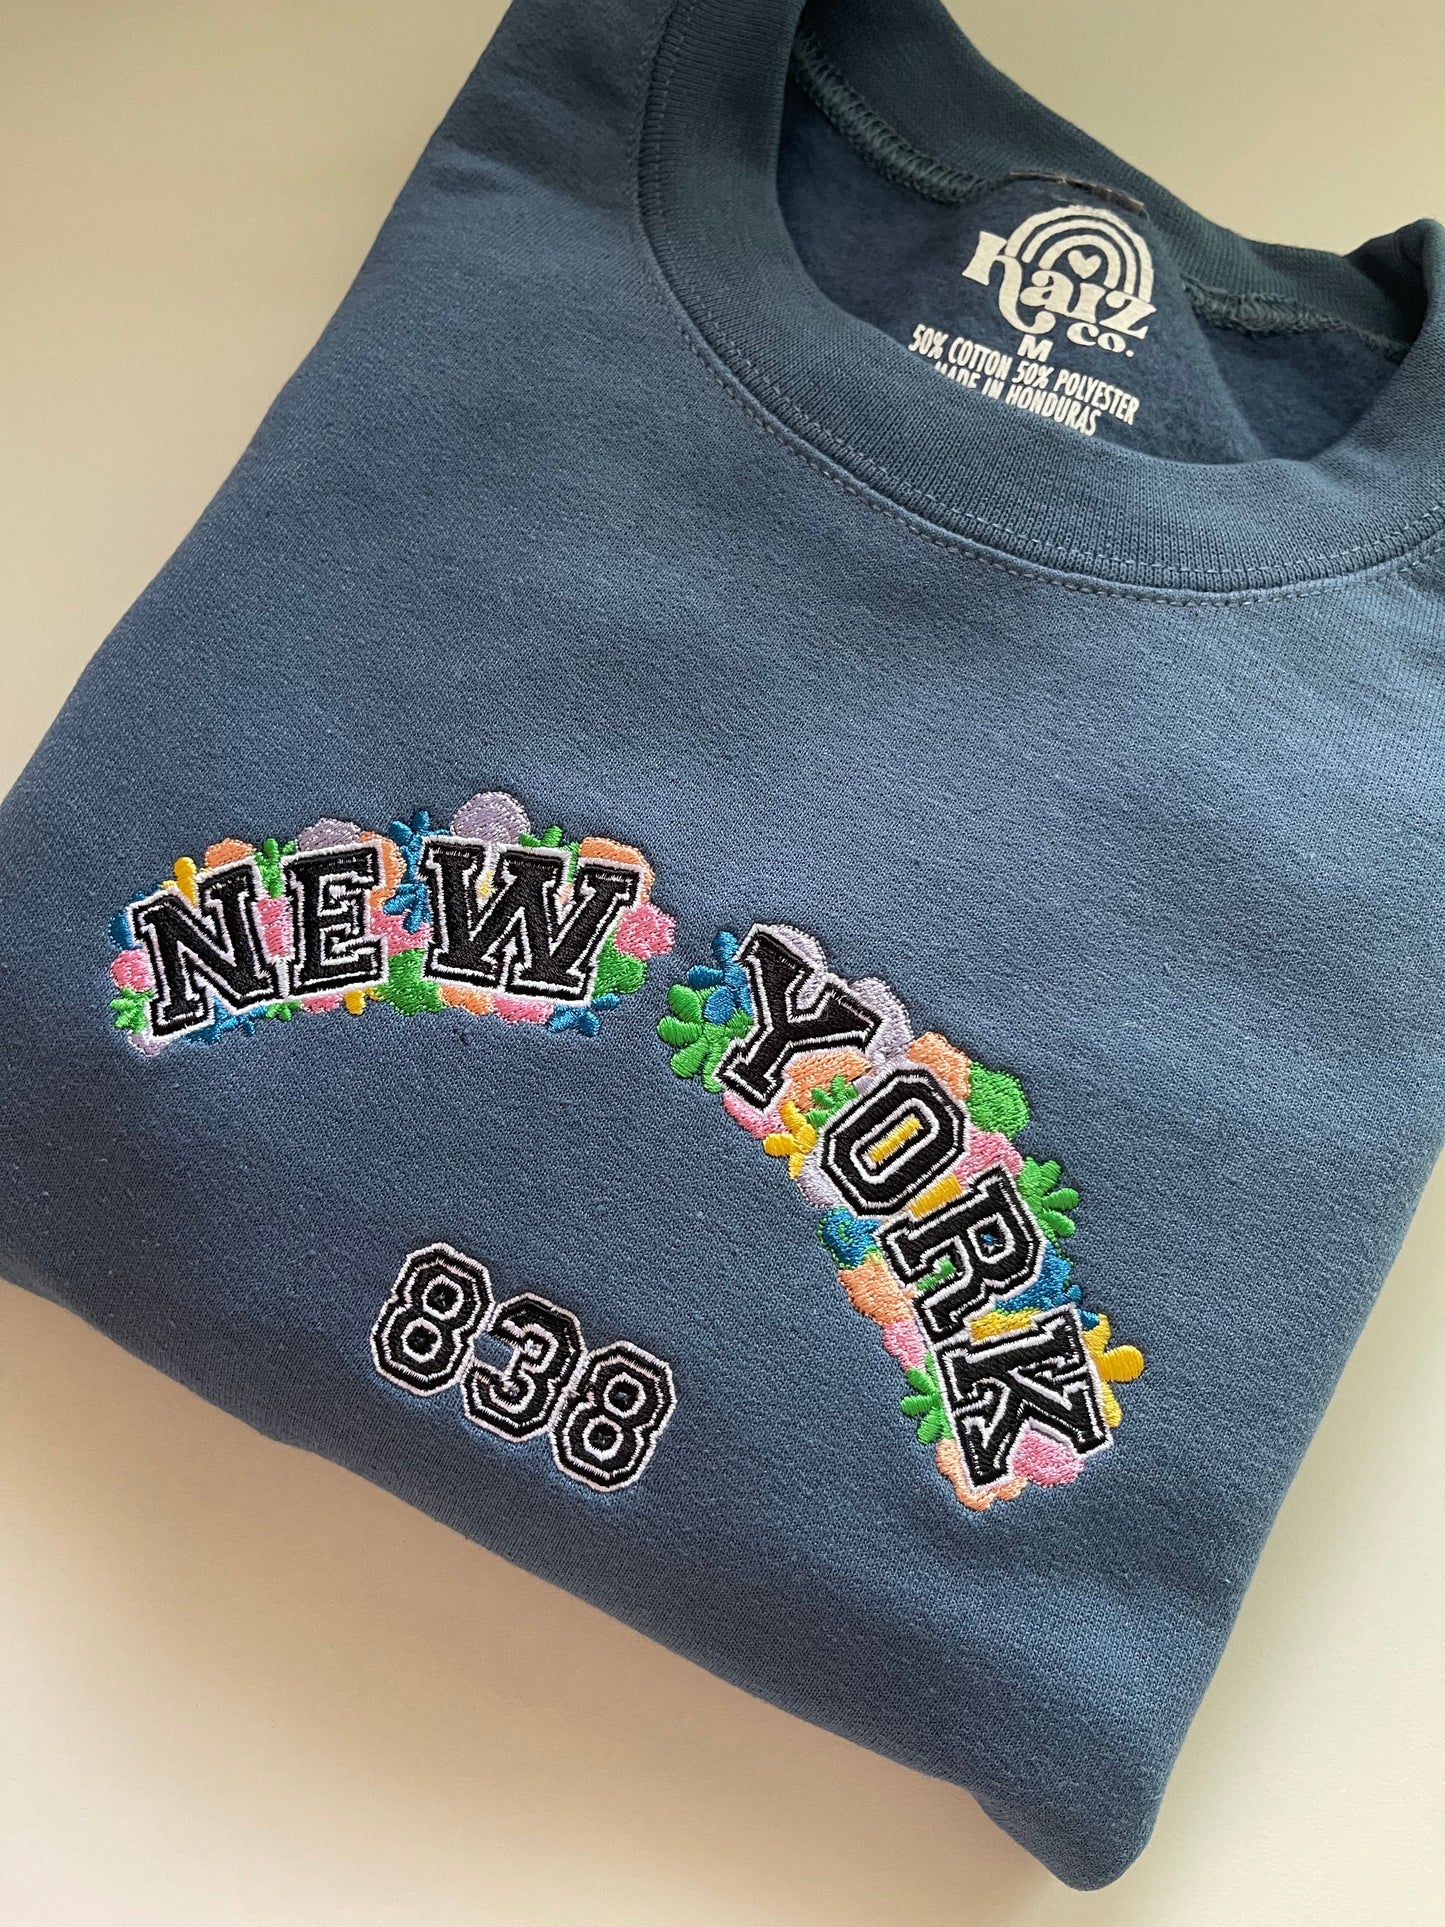 New York 838 embroidered sweatshirt